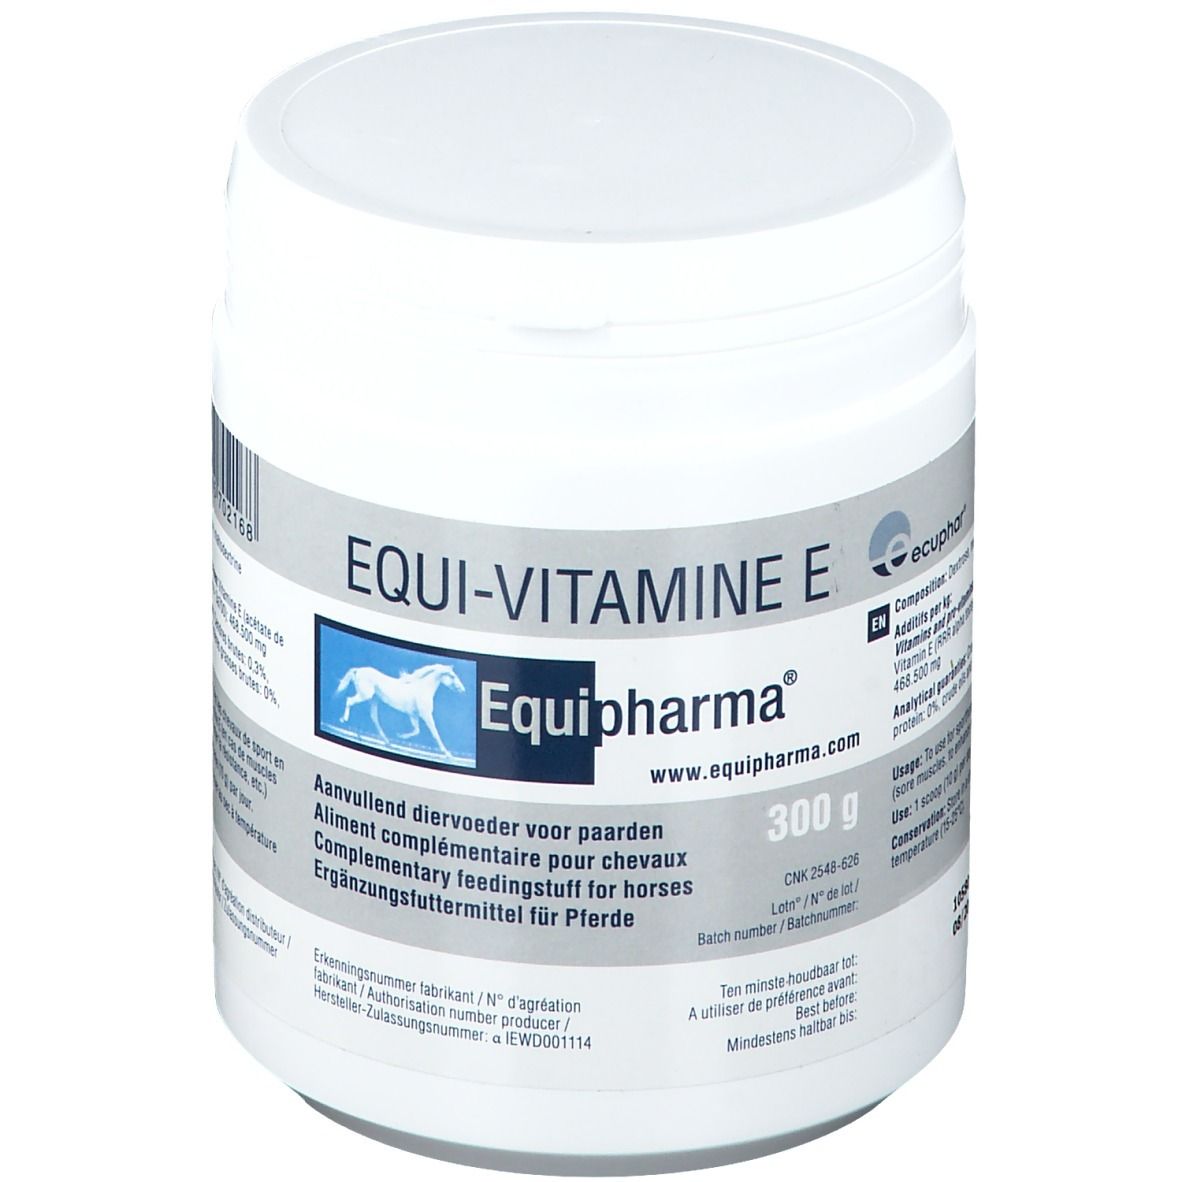 ECUPHAR NV/SA Equipharma® Equi-Vitamin E